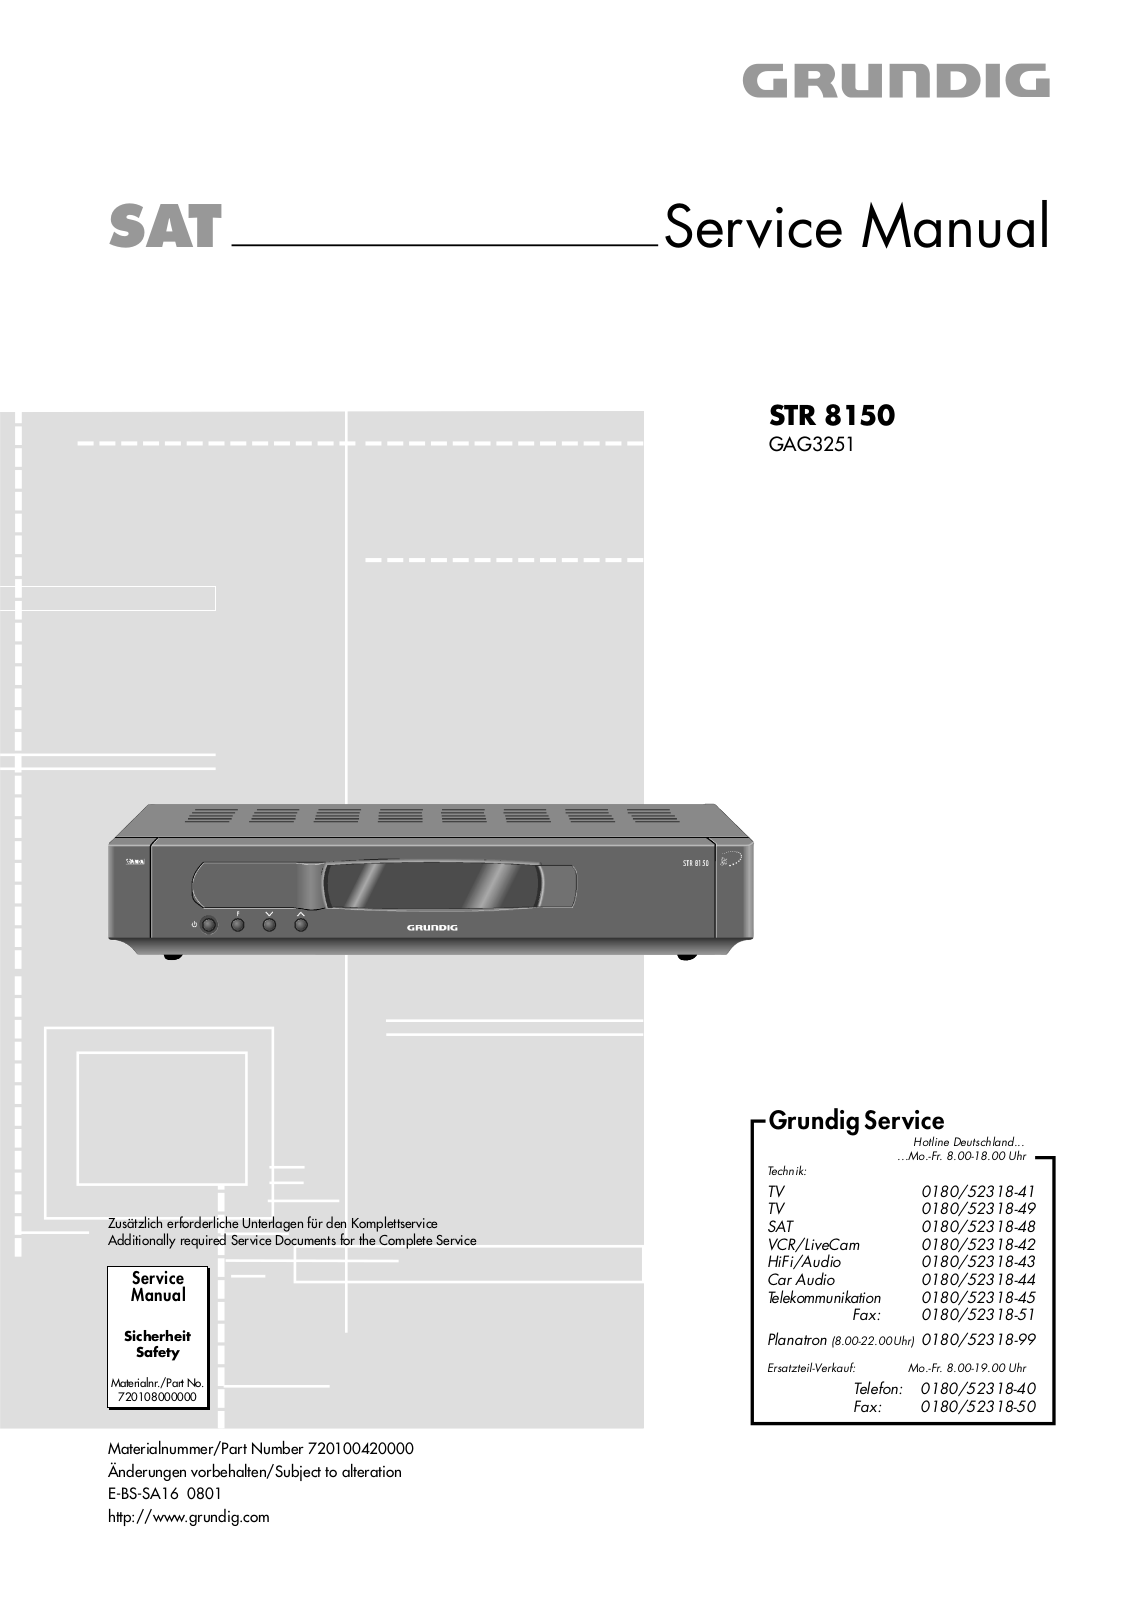 Grundig STR-8150 Service Manual